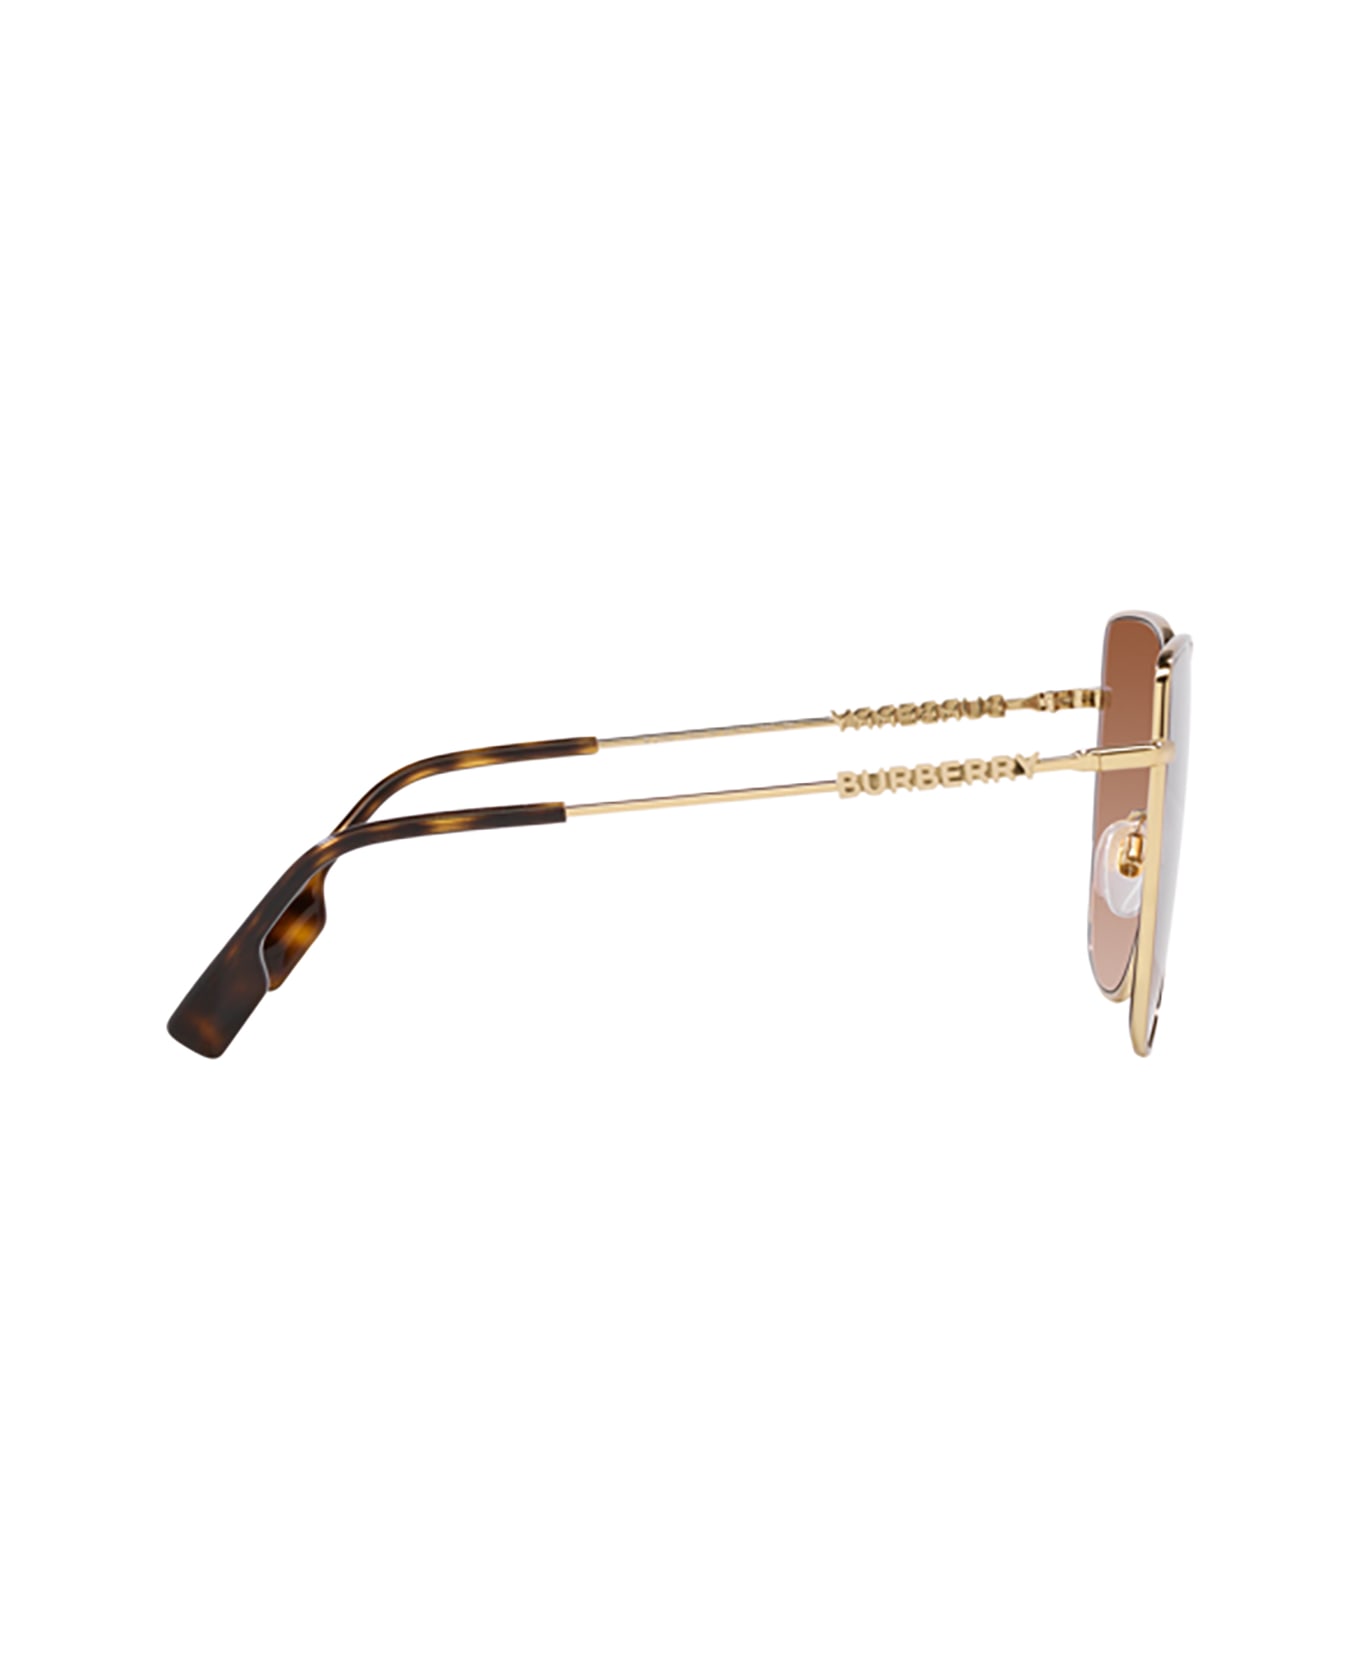 Burberry Eyewear Be3143 Light Gold Sunglasses - Light Gold サングラス